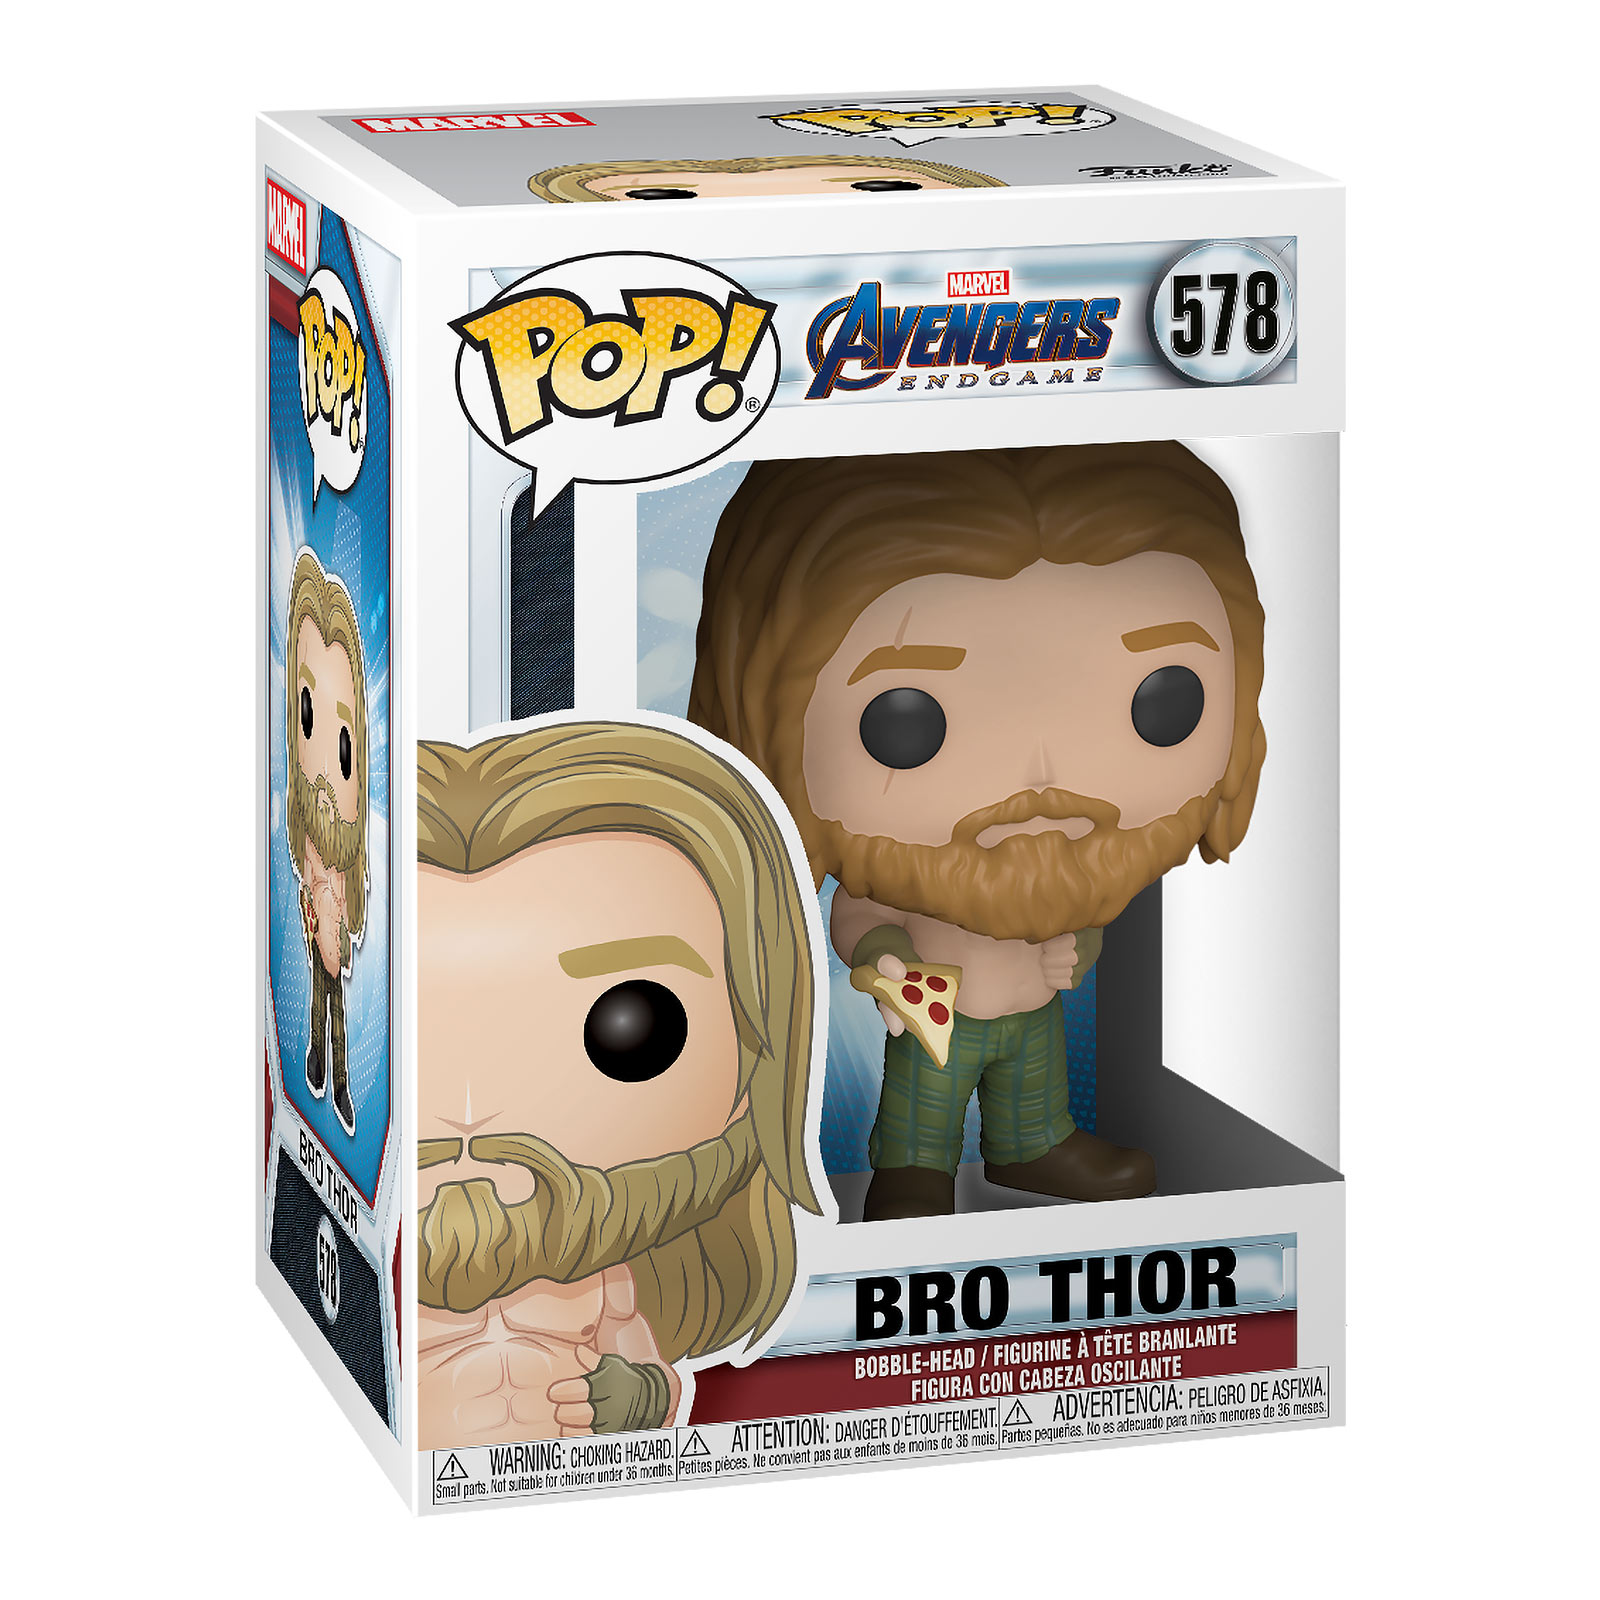 Avengers - Bro Thor with Pizza Endgame Funko Pop bobblehead figure